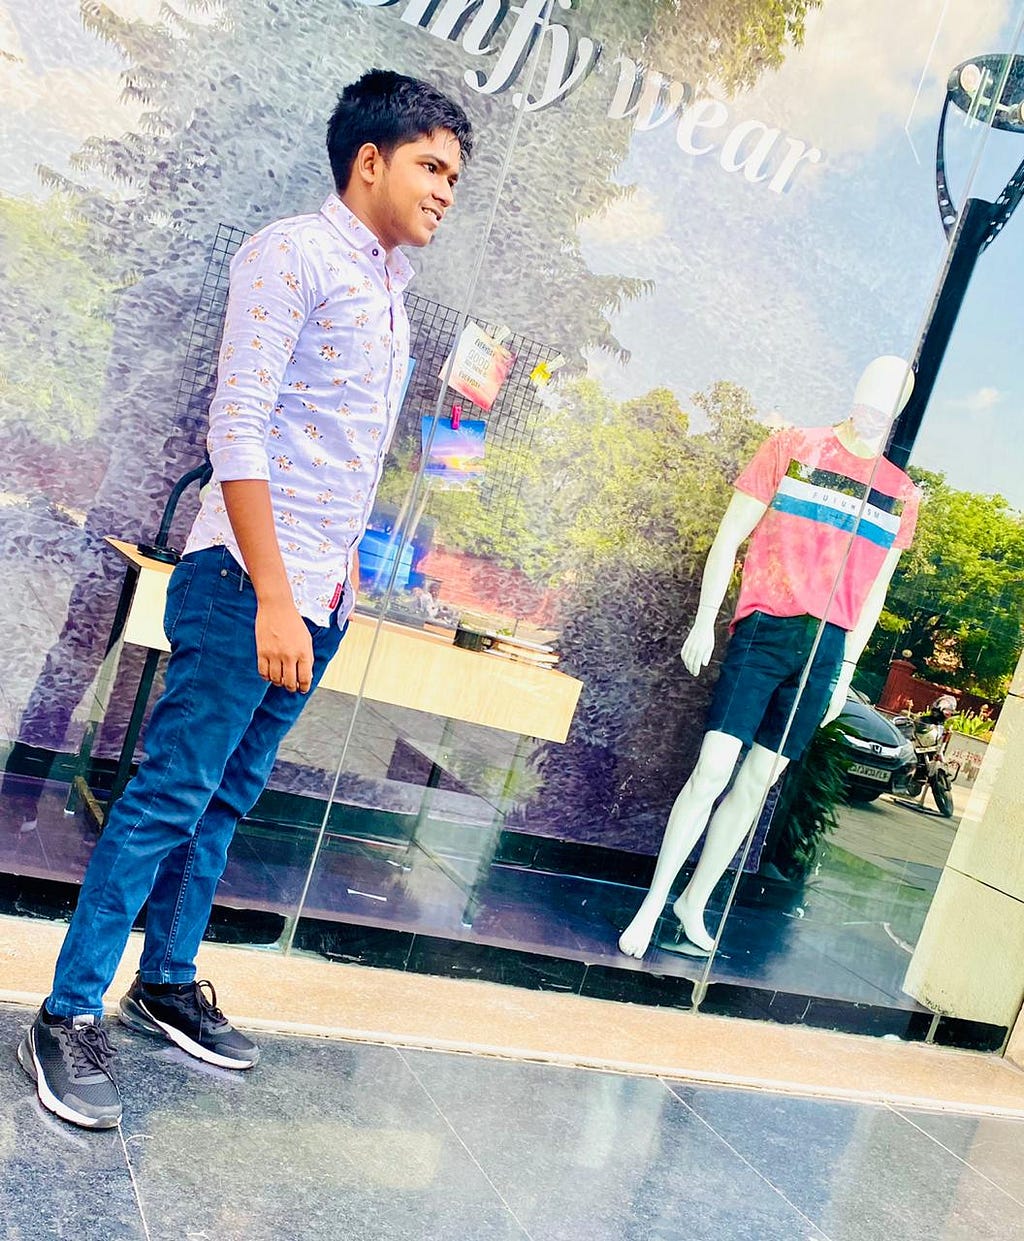 Sahil Chauhan “Asia’s Youngest Digital Entrepreneur” has achieved “TPM DIGITAL MEDIA OPC Pvt. Ltd” in 2019